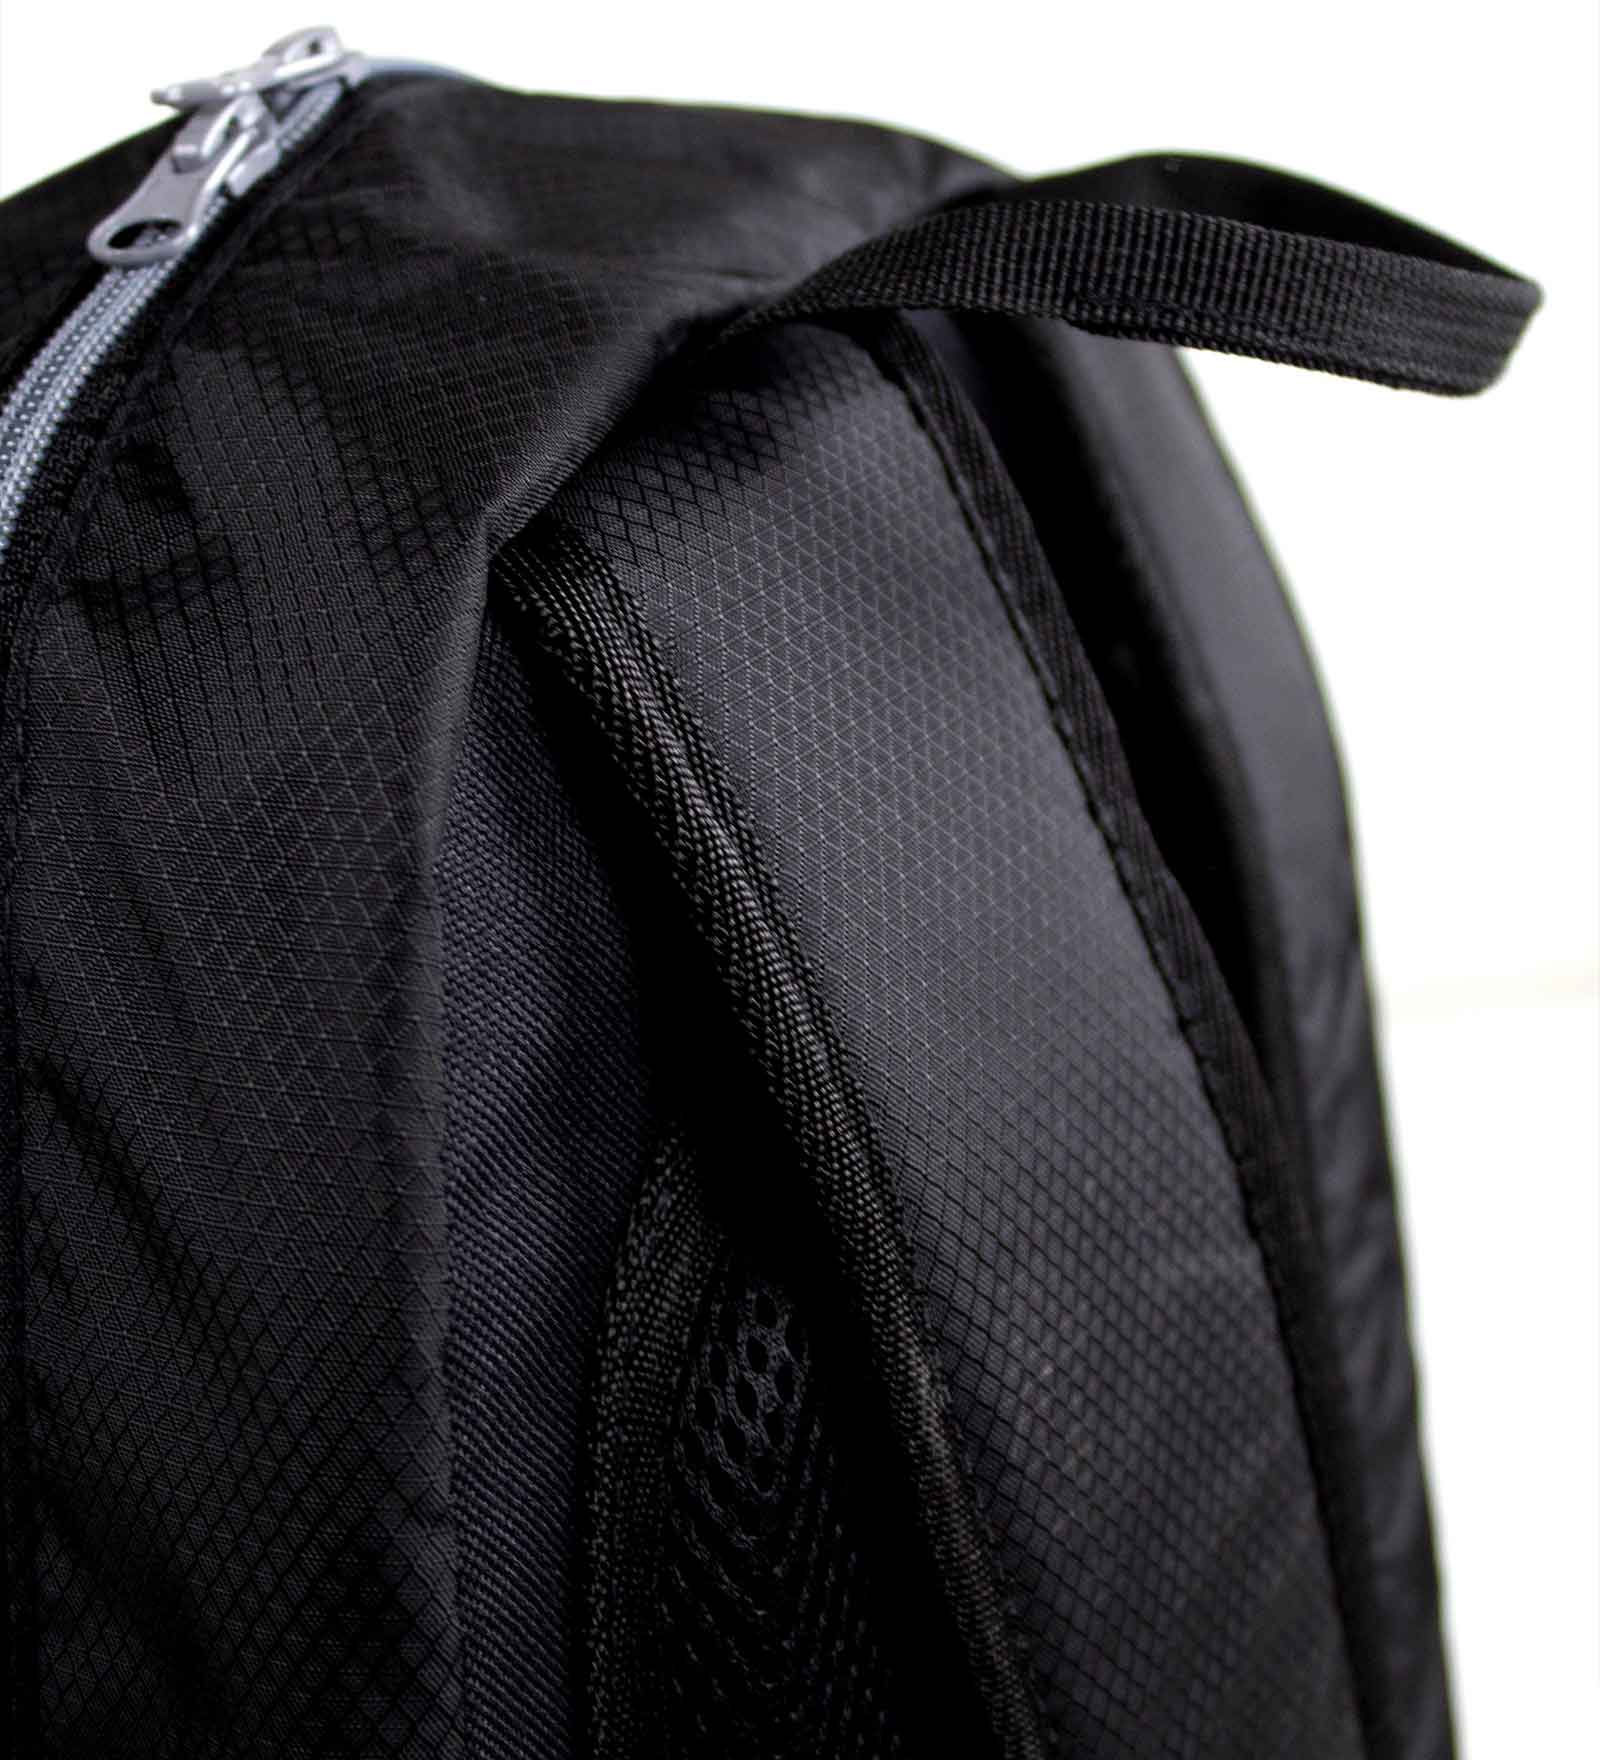 Backpack Noir pour Hommes et Femmes 